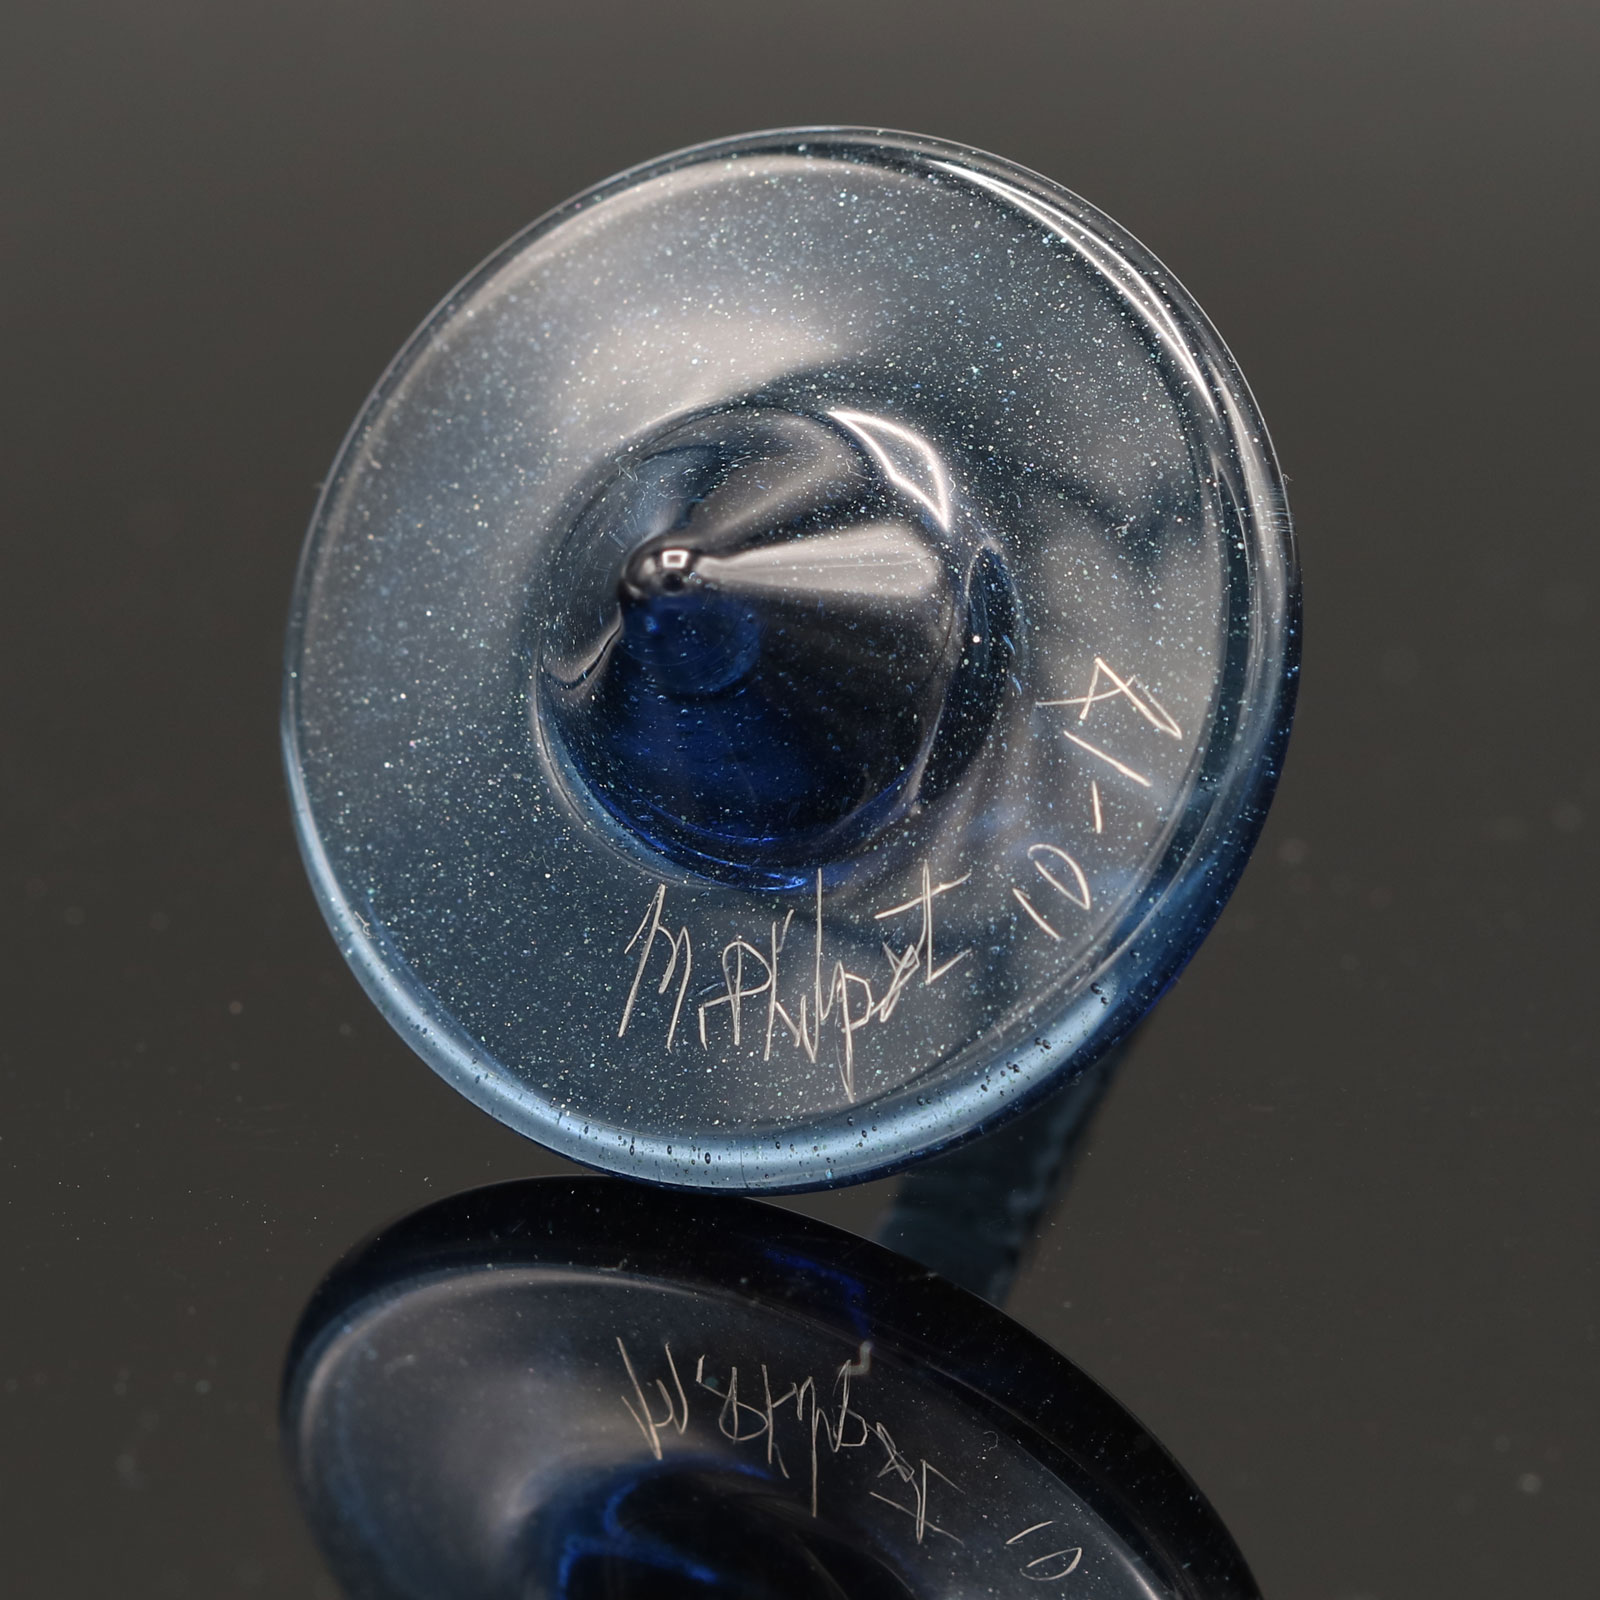 Mike Philpot – Blue Spinning Glass Top